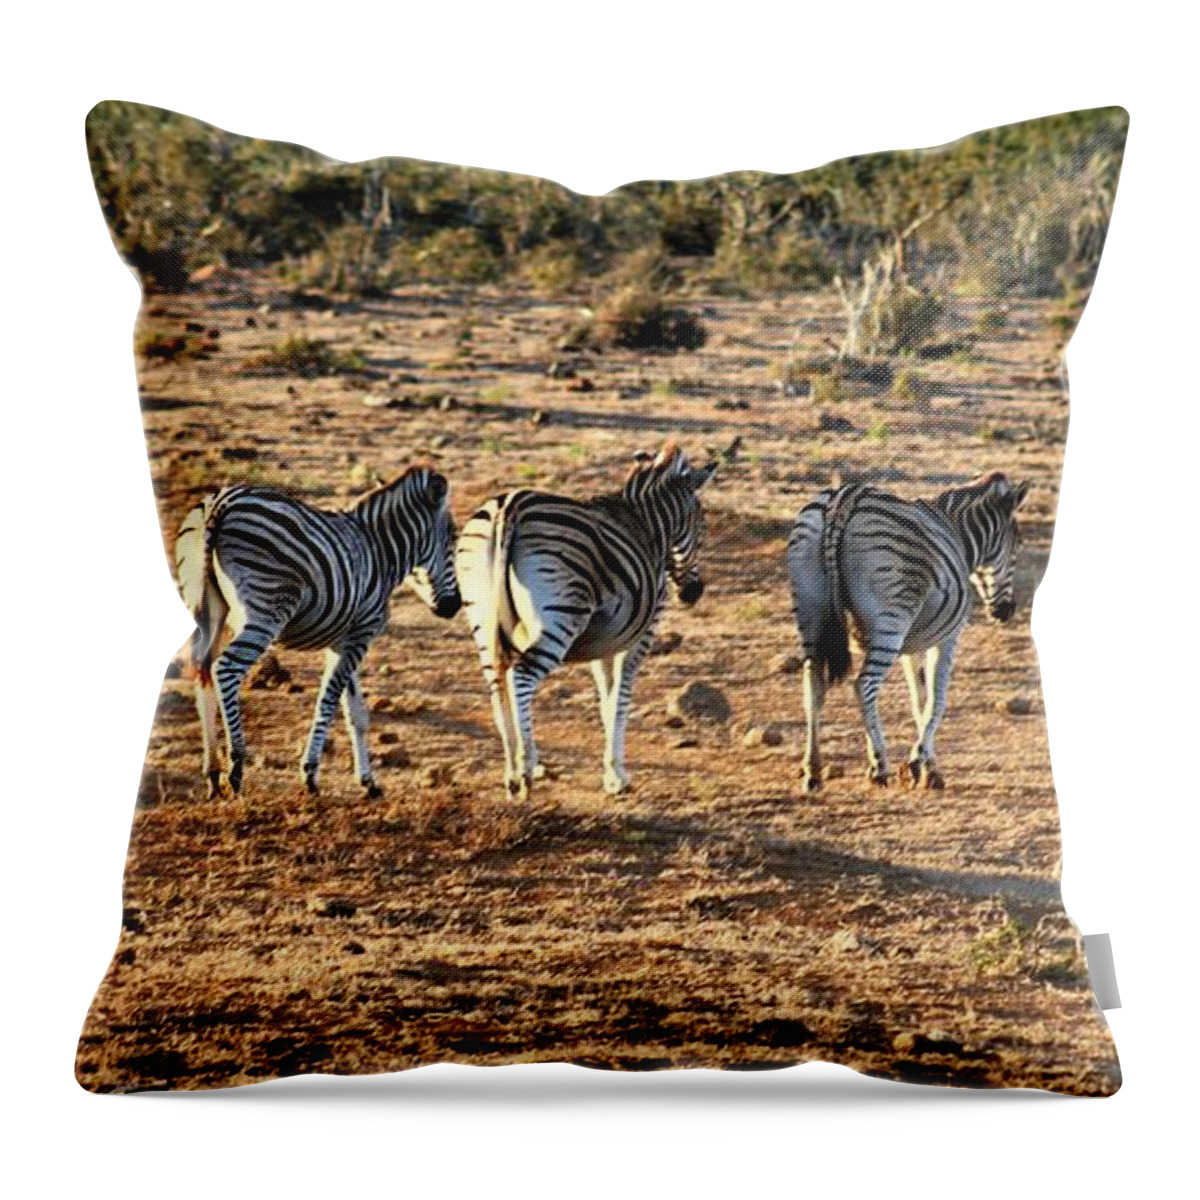 Zebra Throw Pillow featuring the photograph Zebras by FD Graham